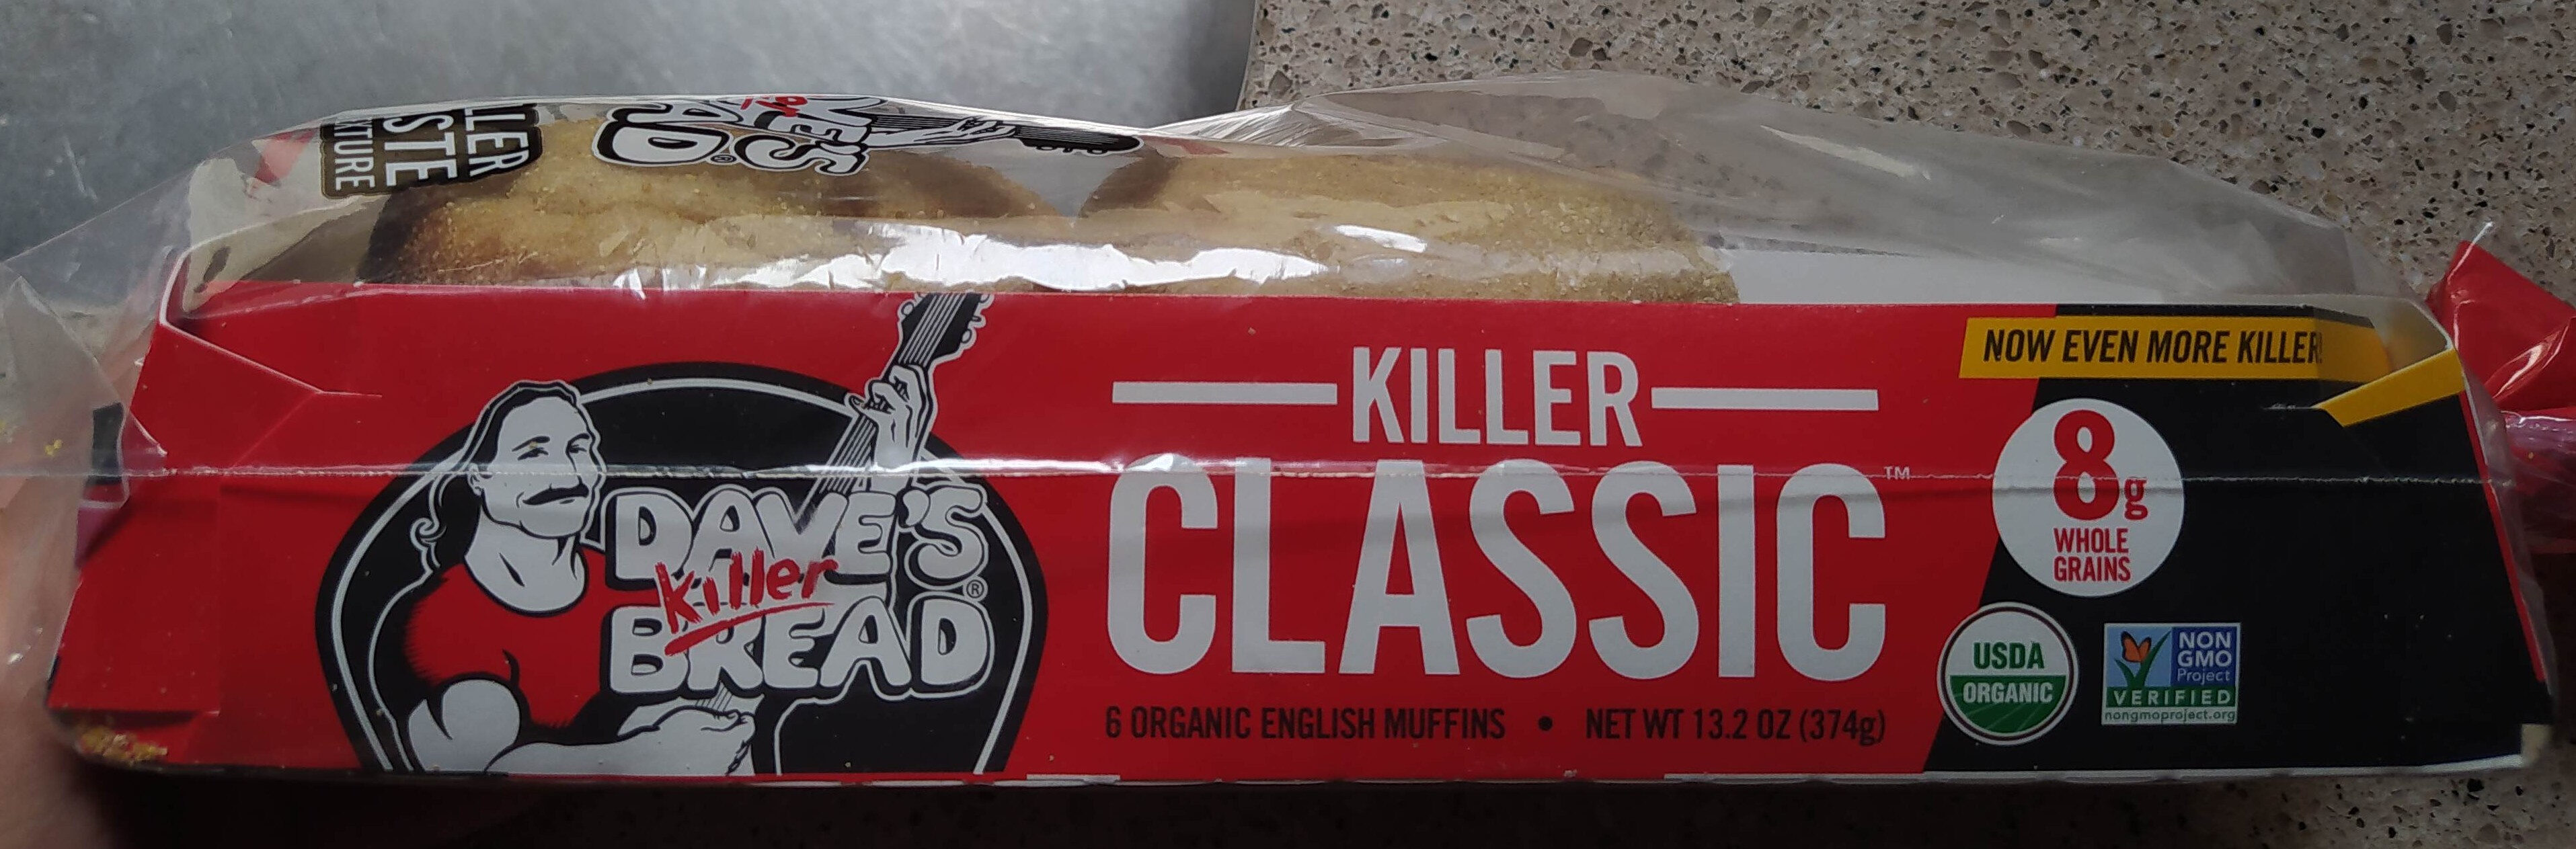 Killer classic organic english muffins, killer classic - Product